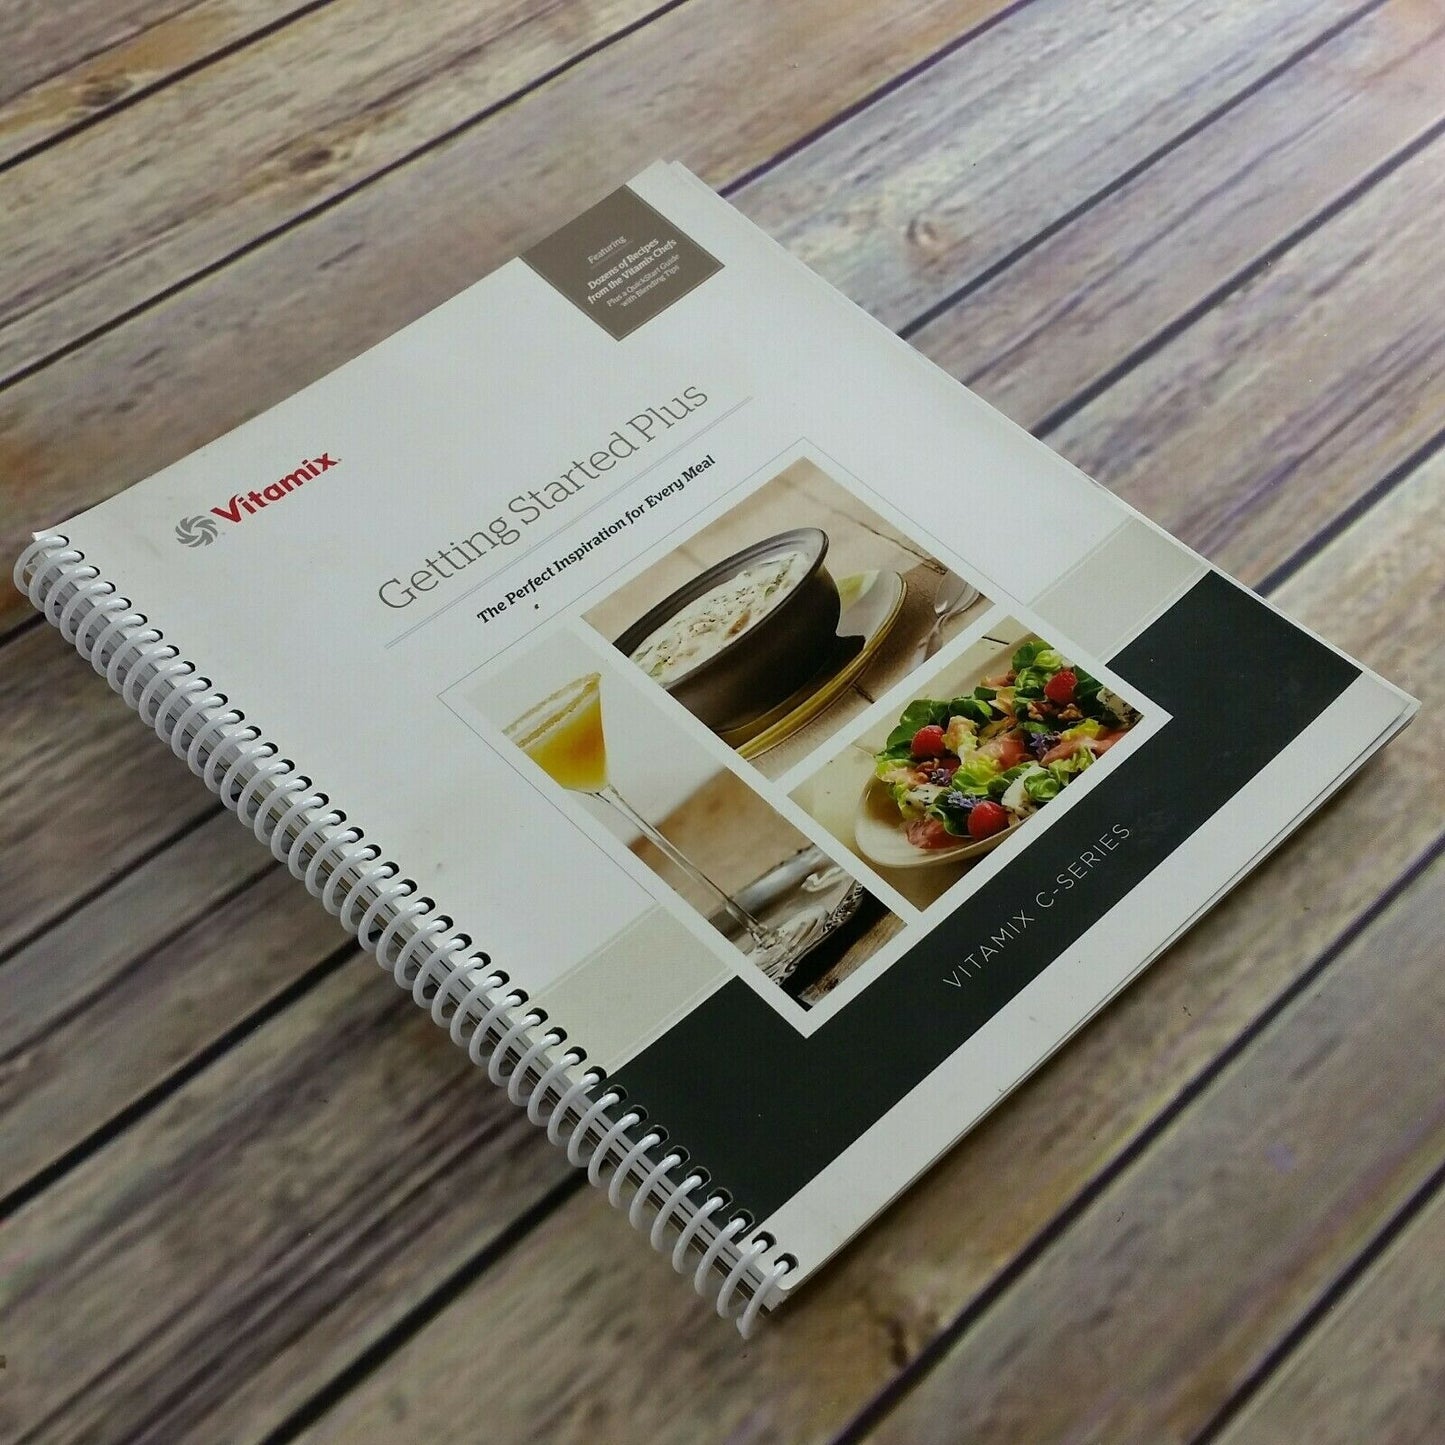 Vitamix Getting Started Plus Cookbook Recipes C-Series Plus Blending Tips 2014